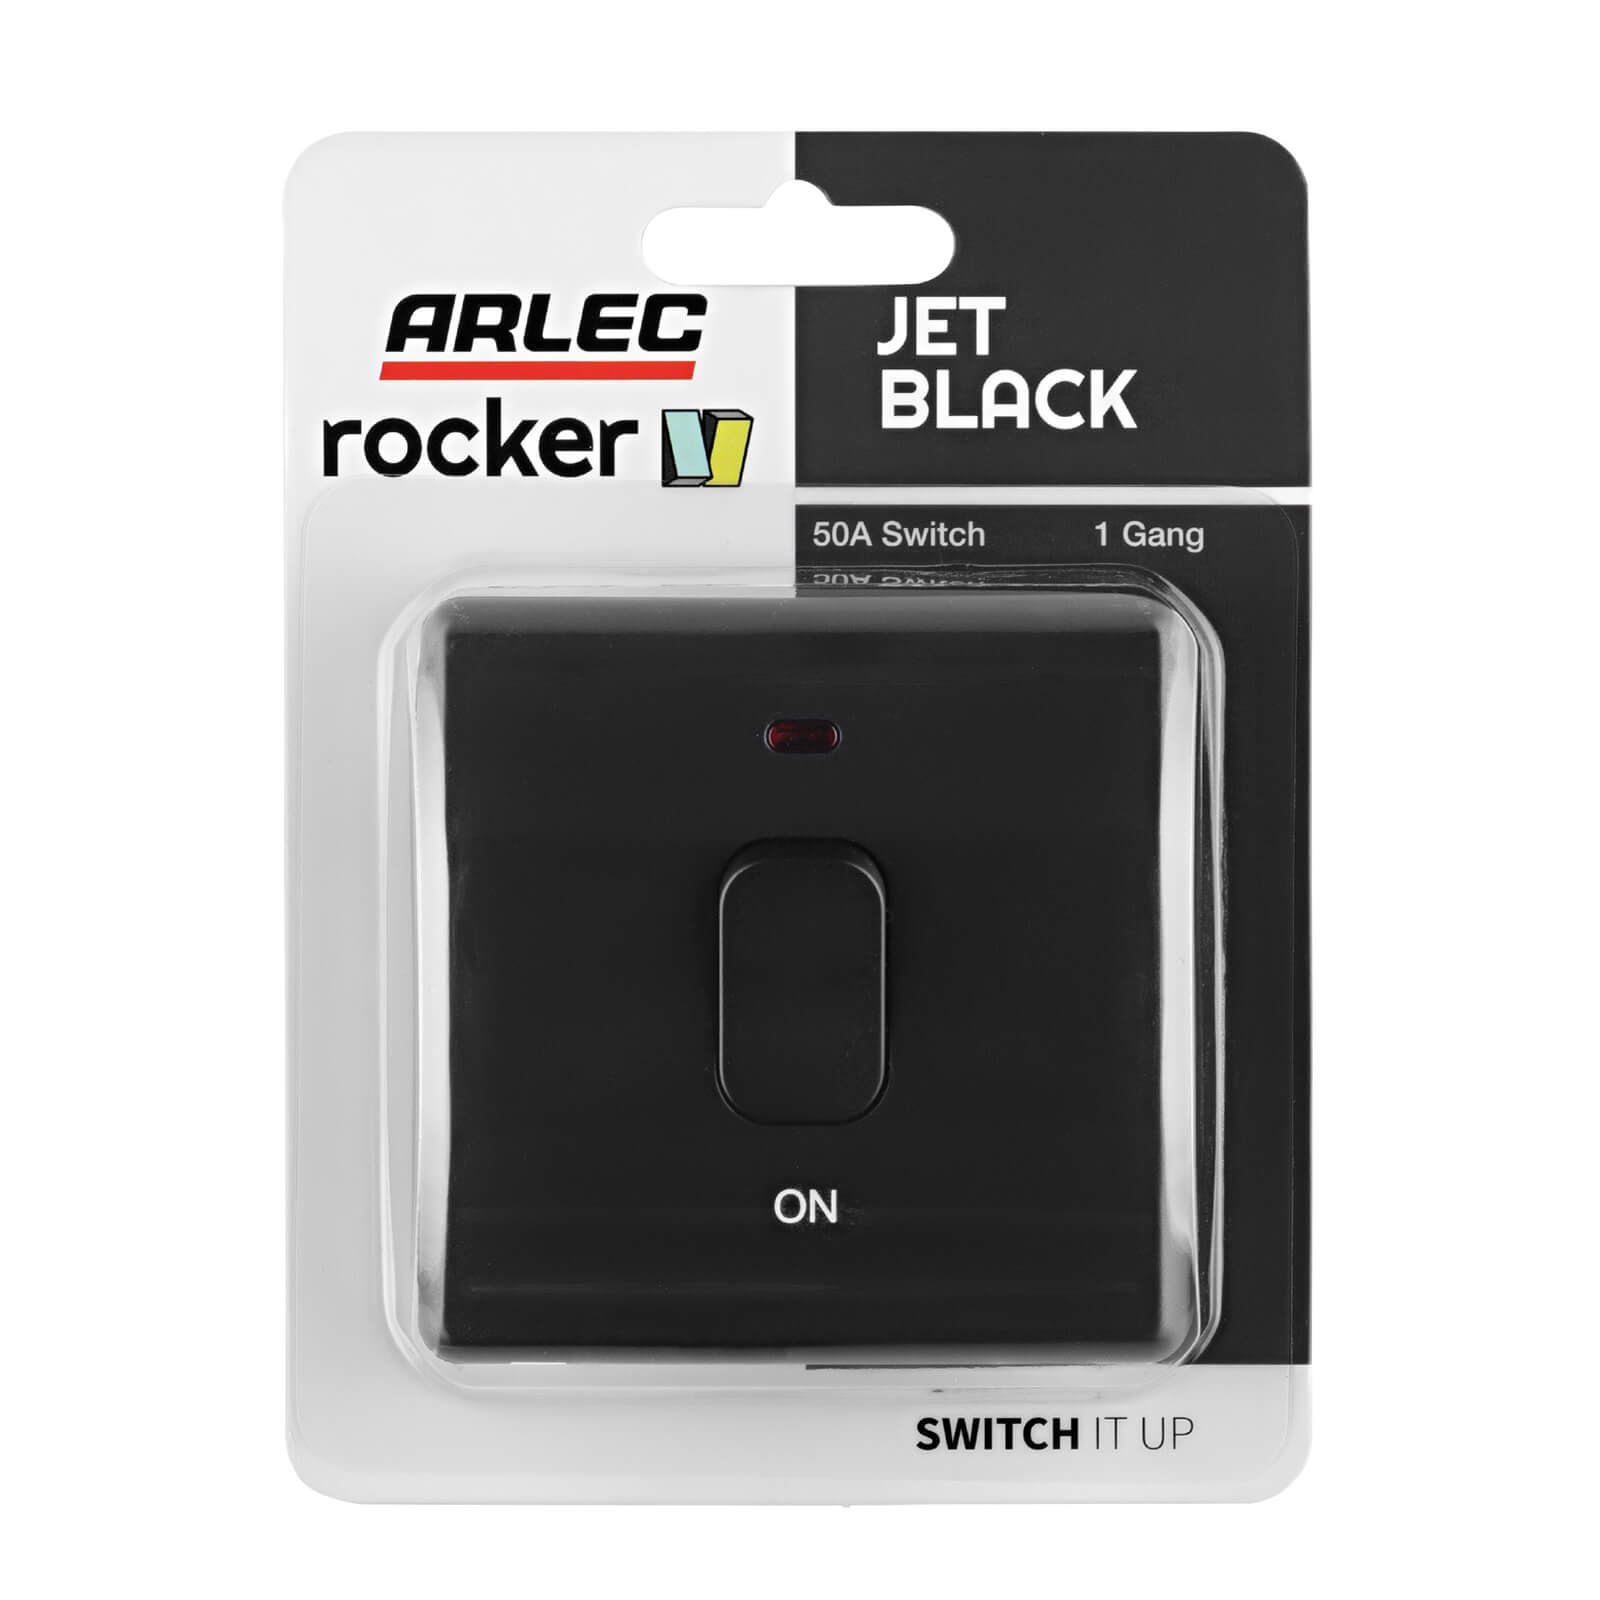 Arlec Rocker 50A 1Gang Double pole Jet Black Single switch